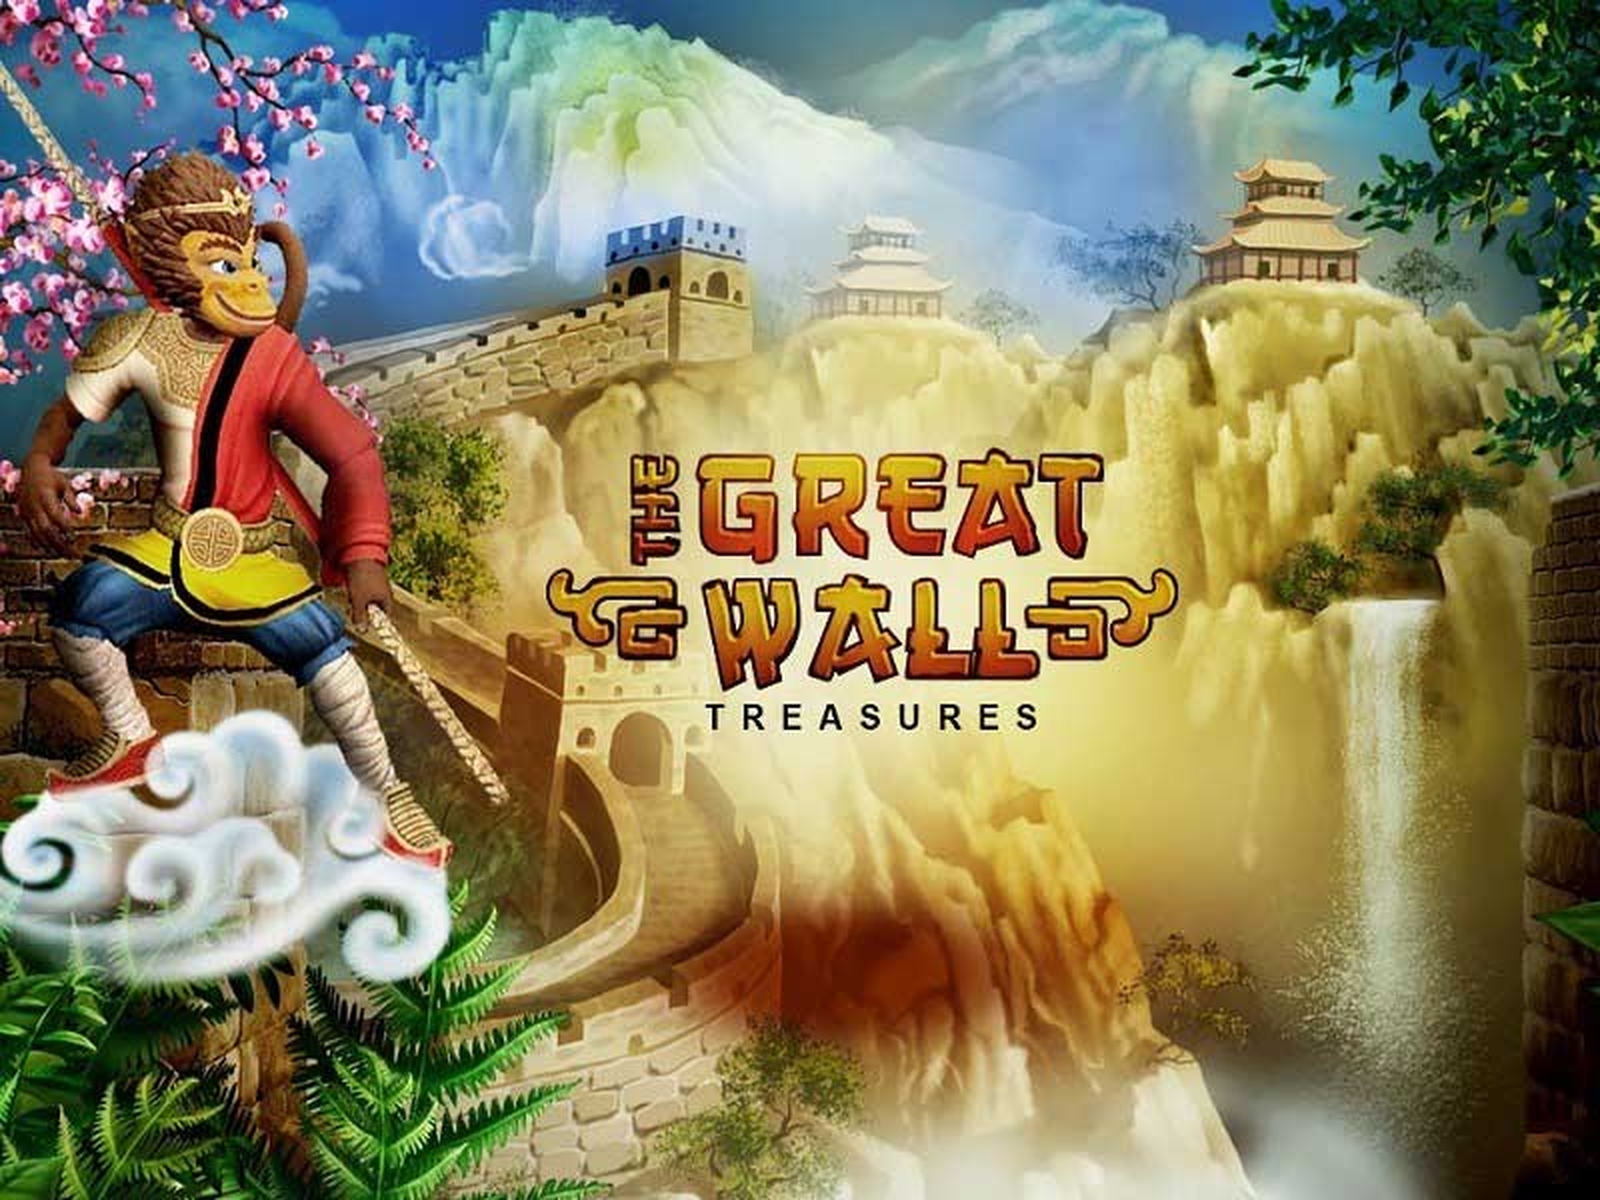 The Great Wall Treasure demo